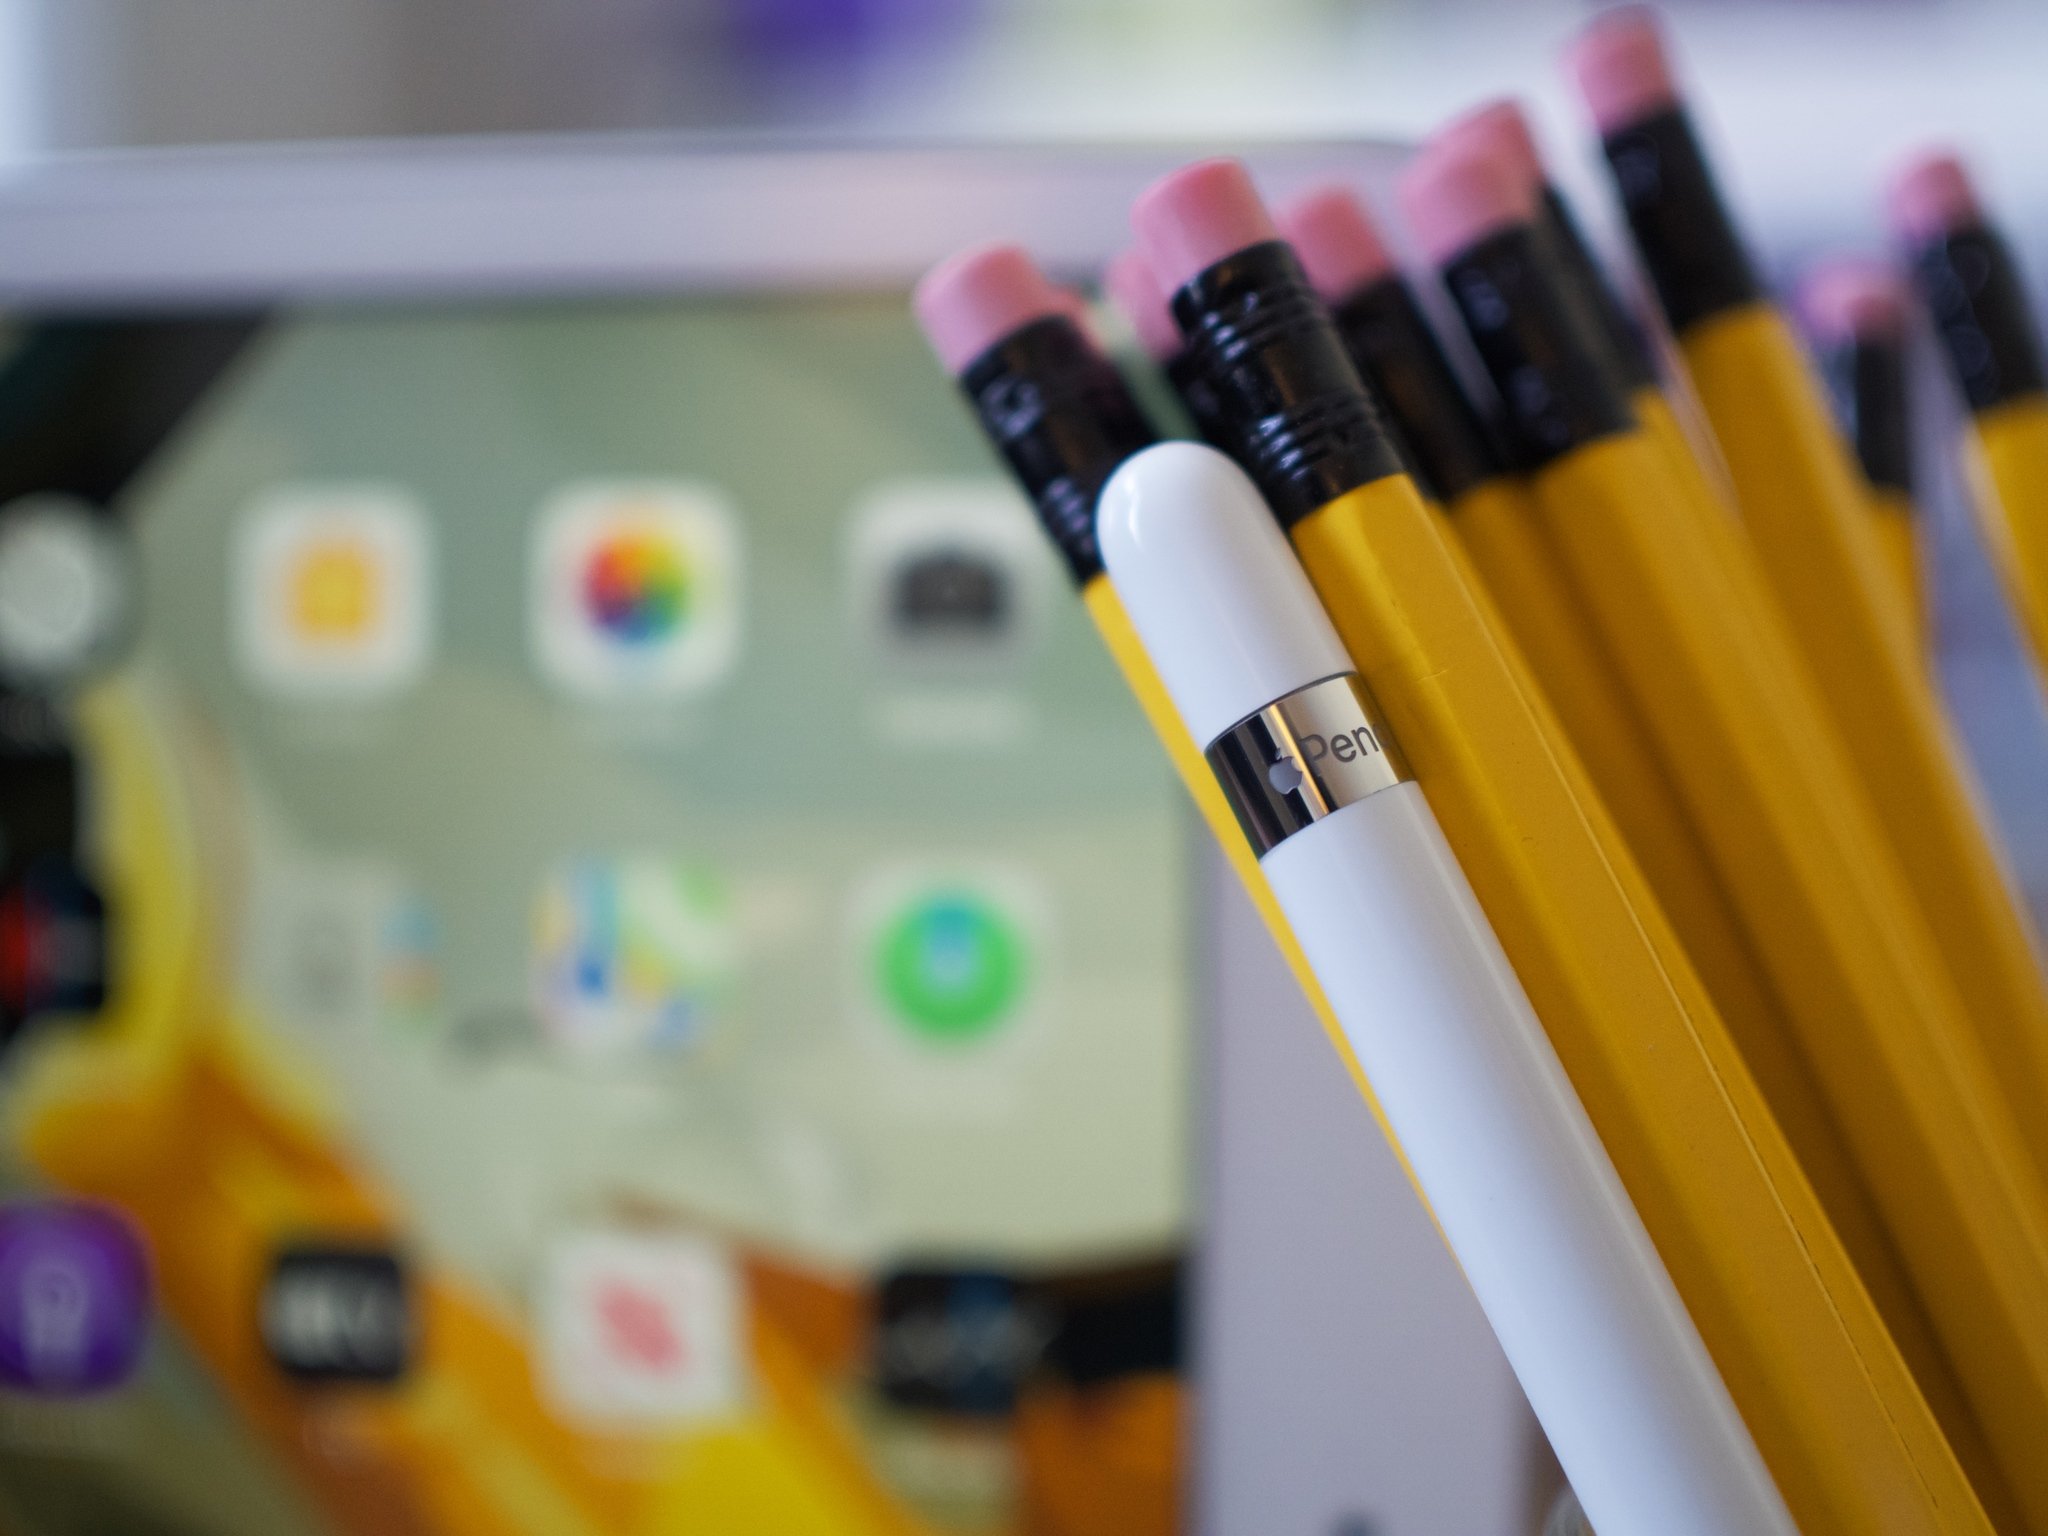 Apple Pencil (1st Generation) Review